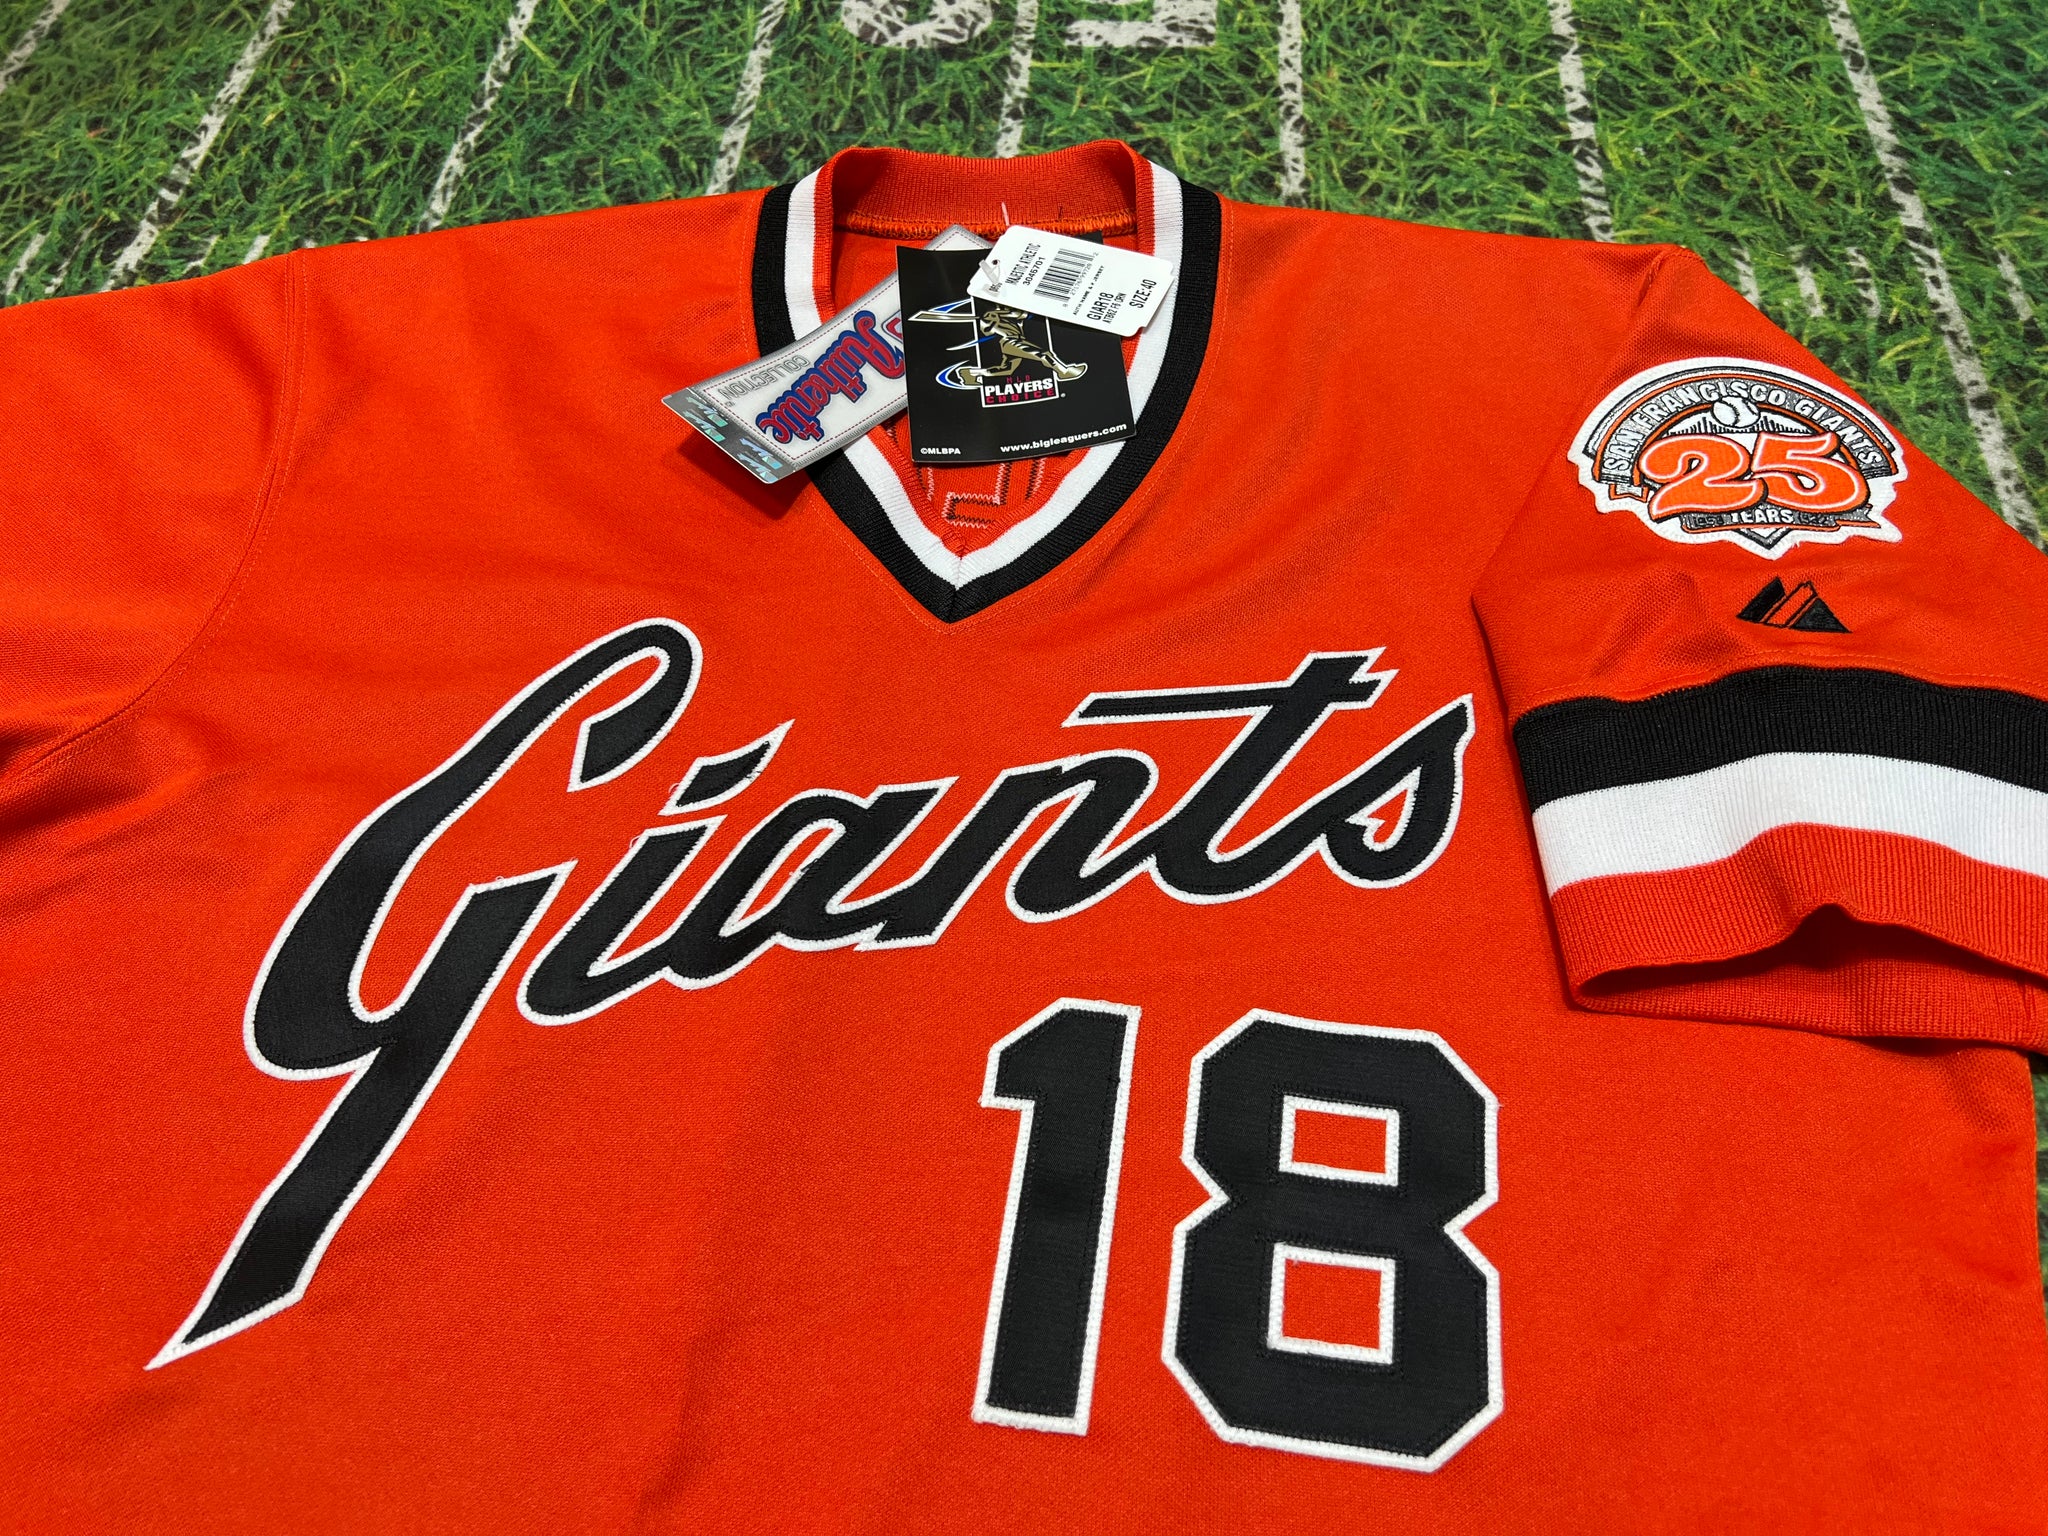 Mens Vintage Japanese Orange 'Giants' Baseball Jersey Shirt Retro M 40